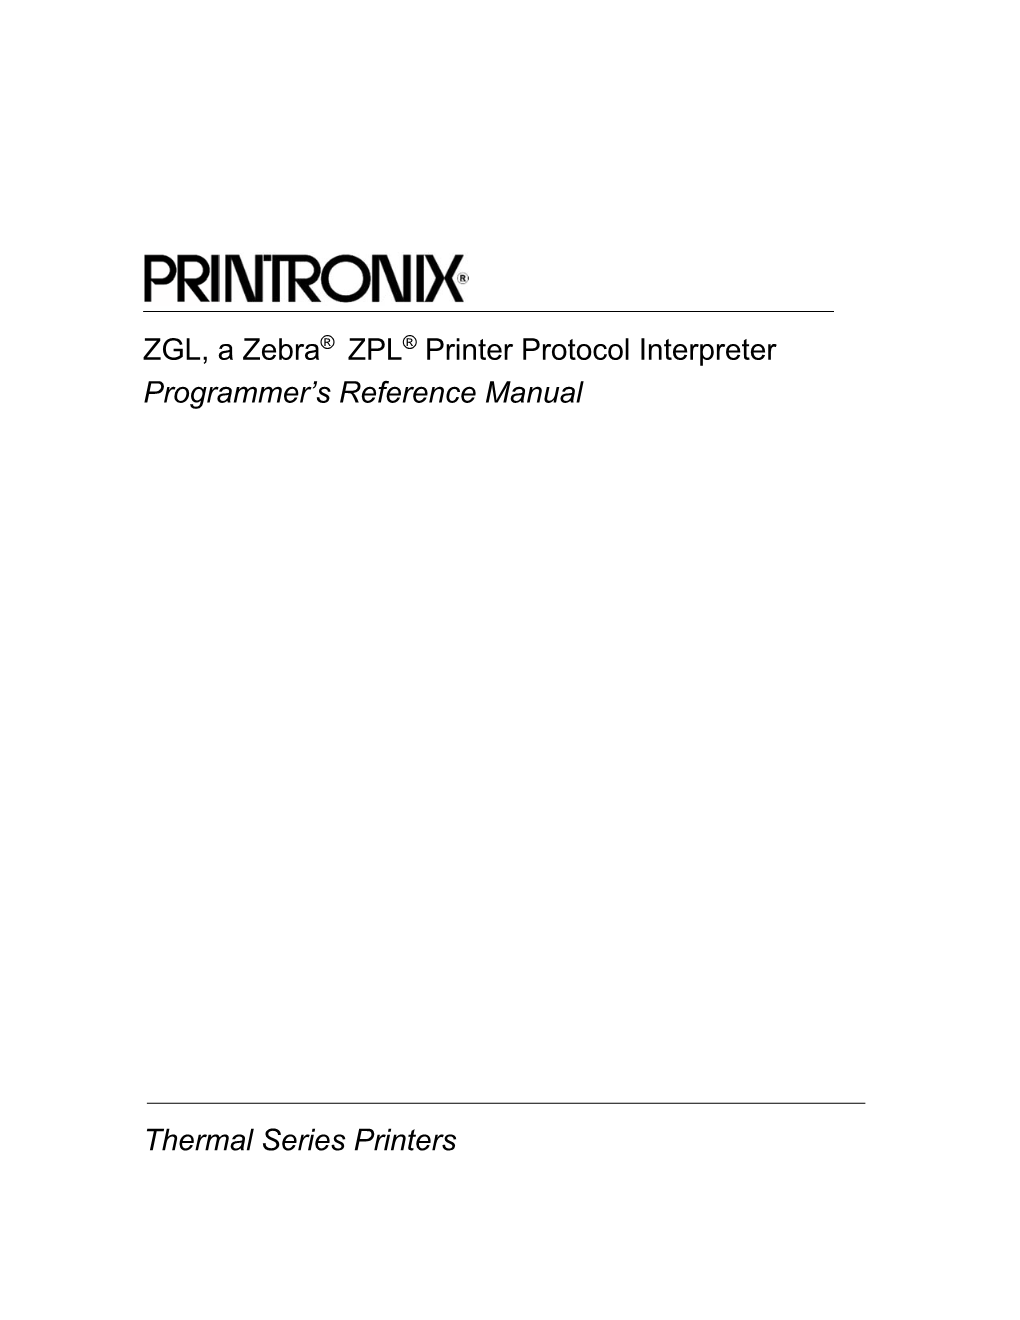 ZGL, a Zebra® ZPL® Printer Protocol Interpreter Programmer's Reference